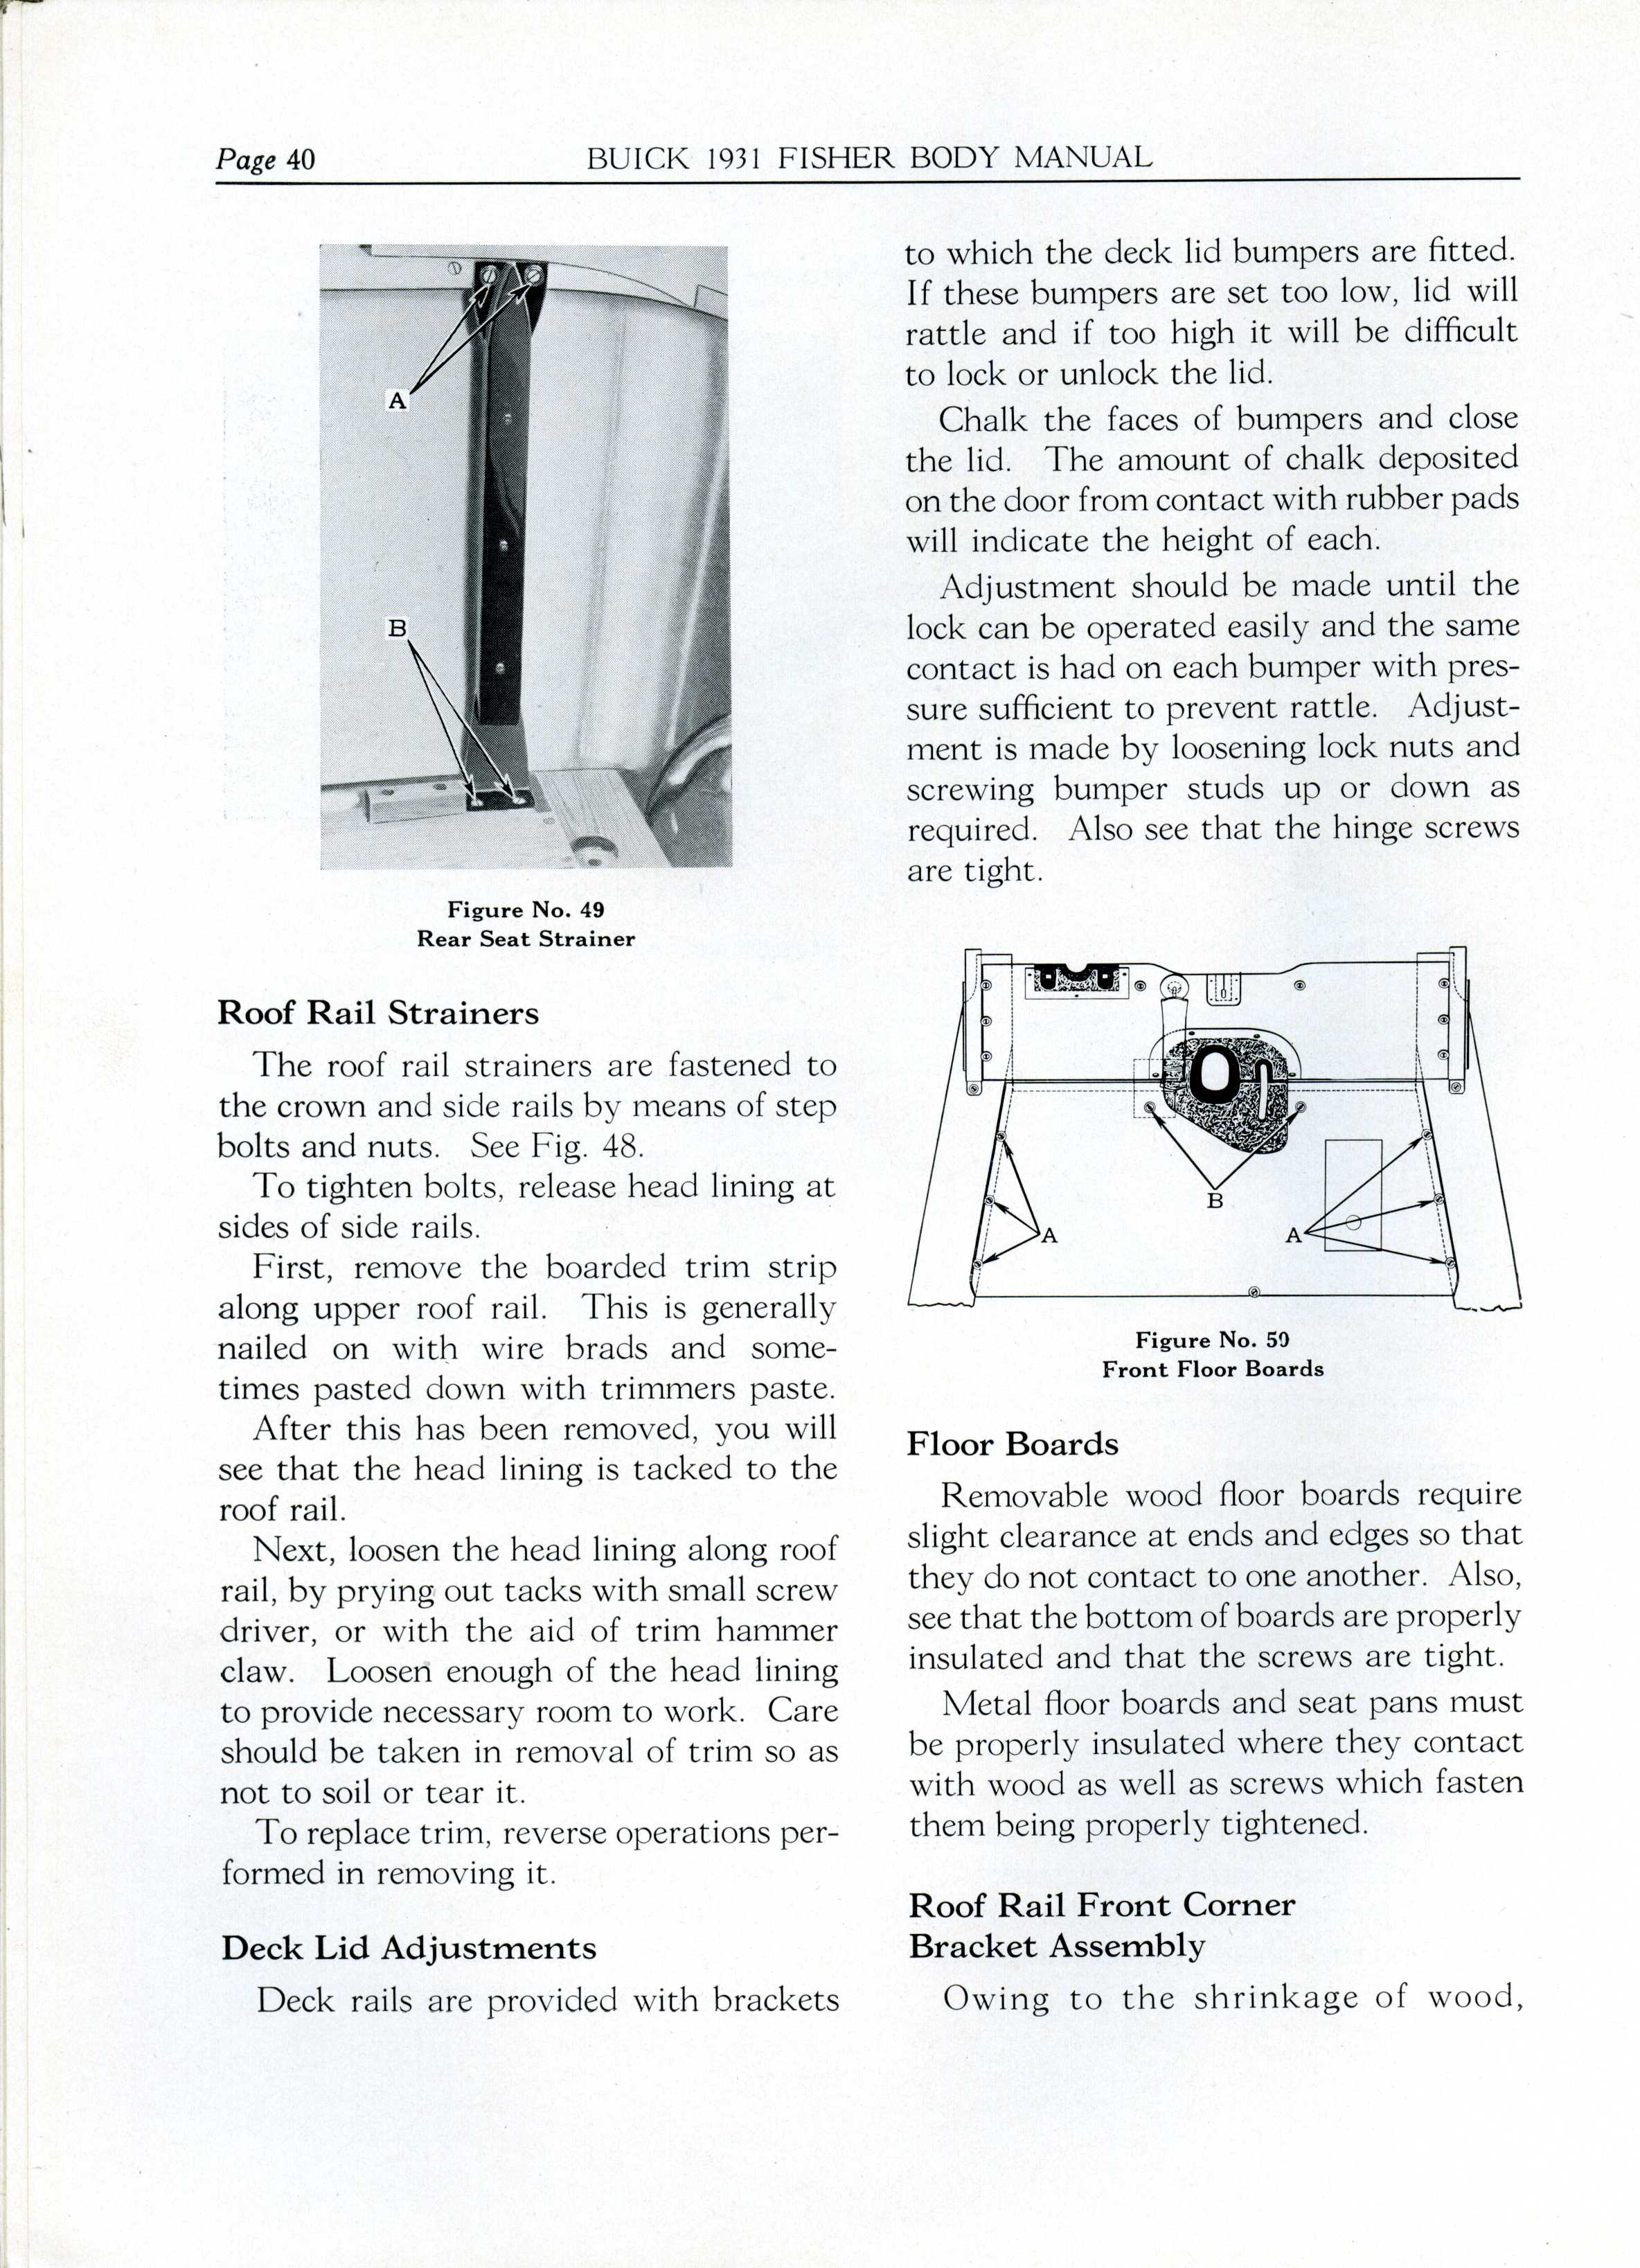 1931 Buick Fisher Body Manual-40